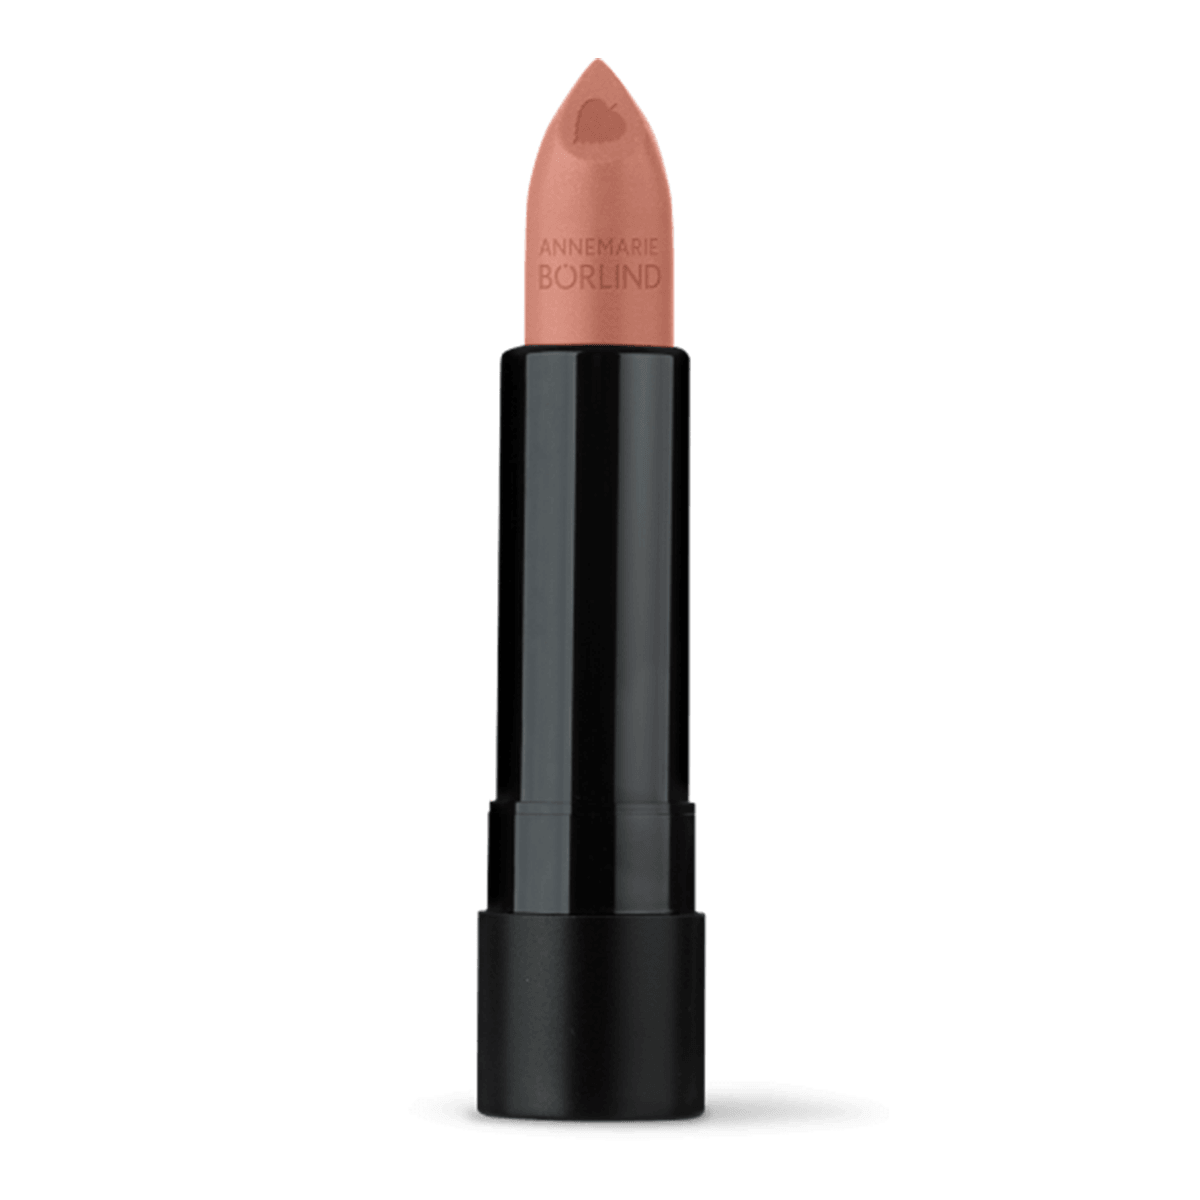 Annemarie Borlind Lipstick Nude 4.2g Cosmetics - Lip Makeup at Village Vitamin Store